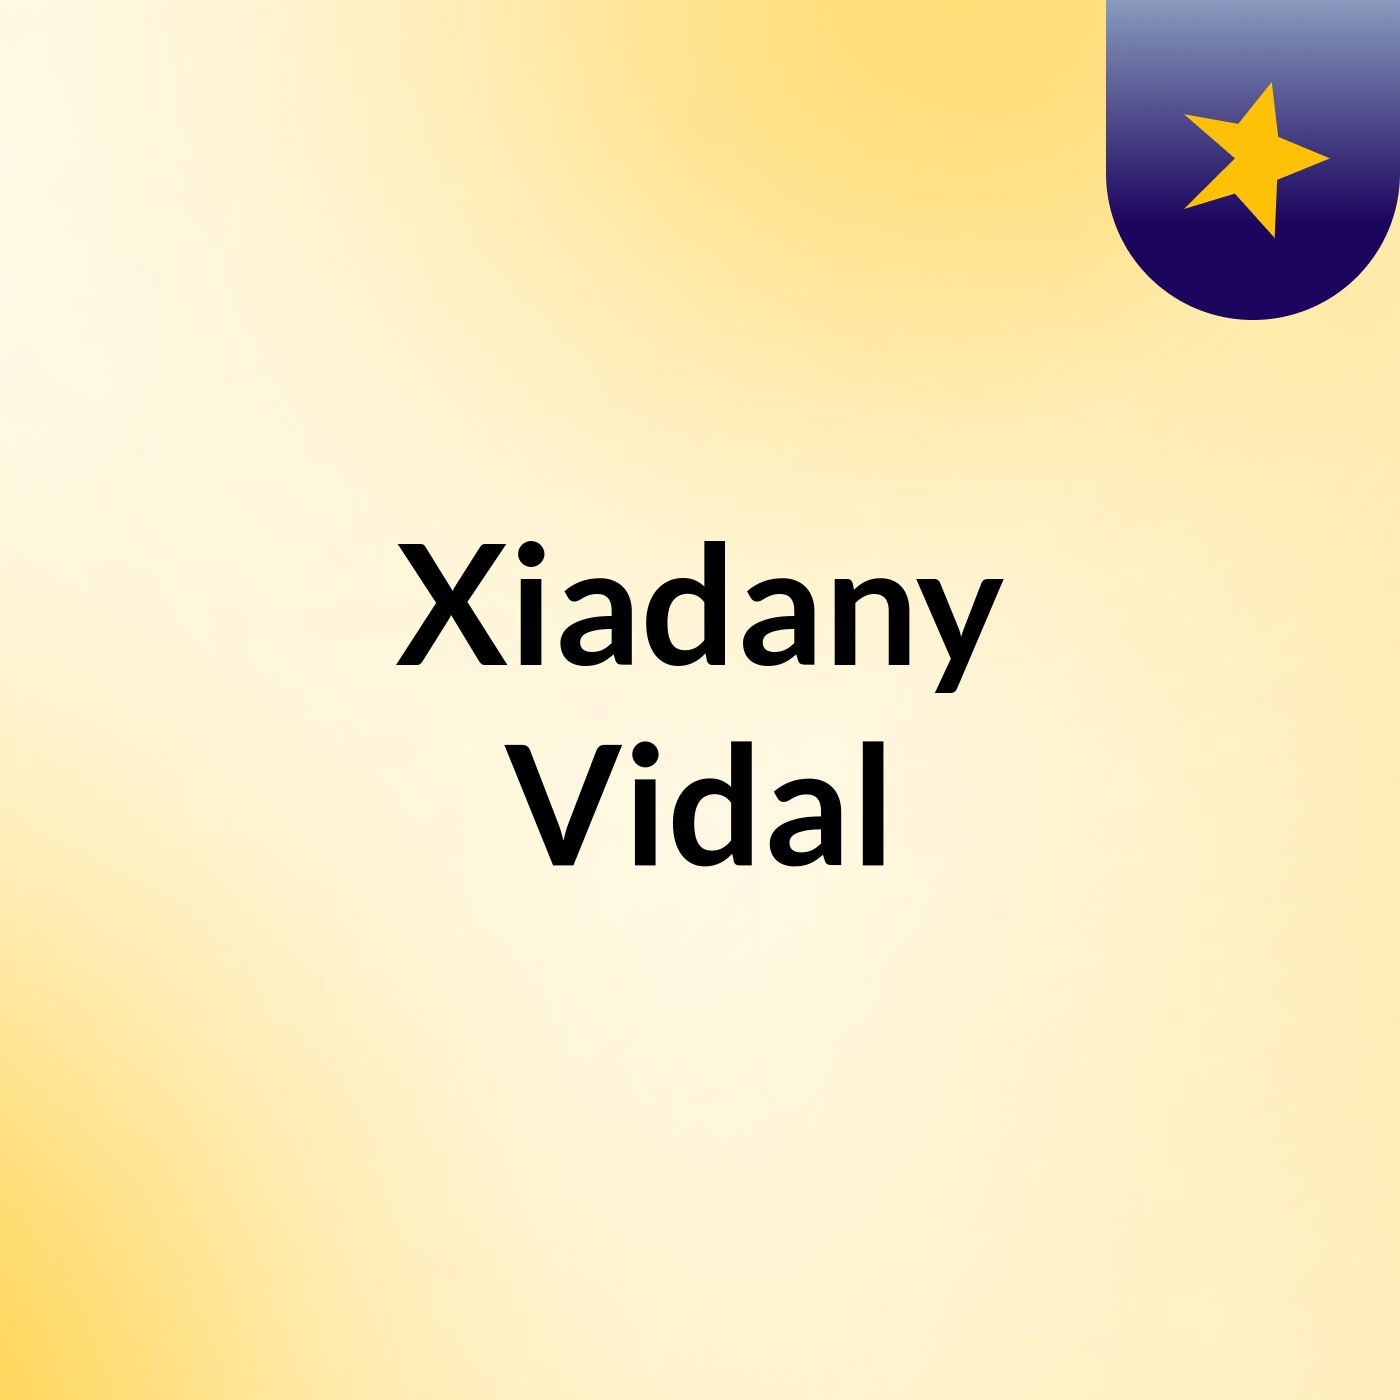 Xiadany Vidal